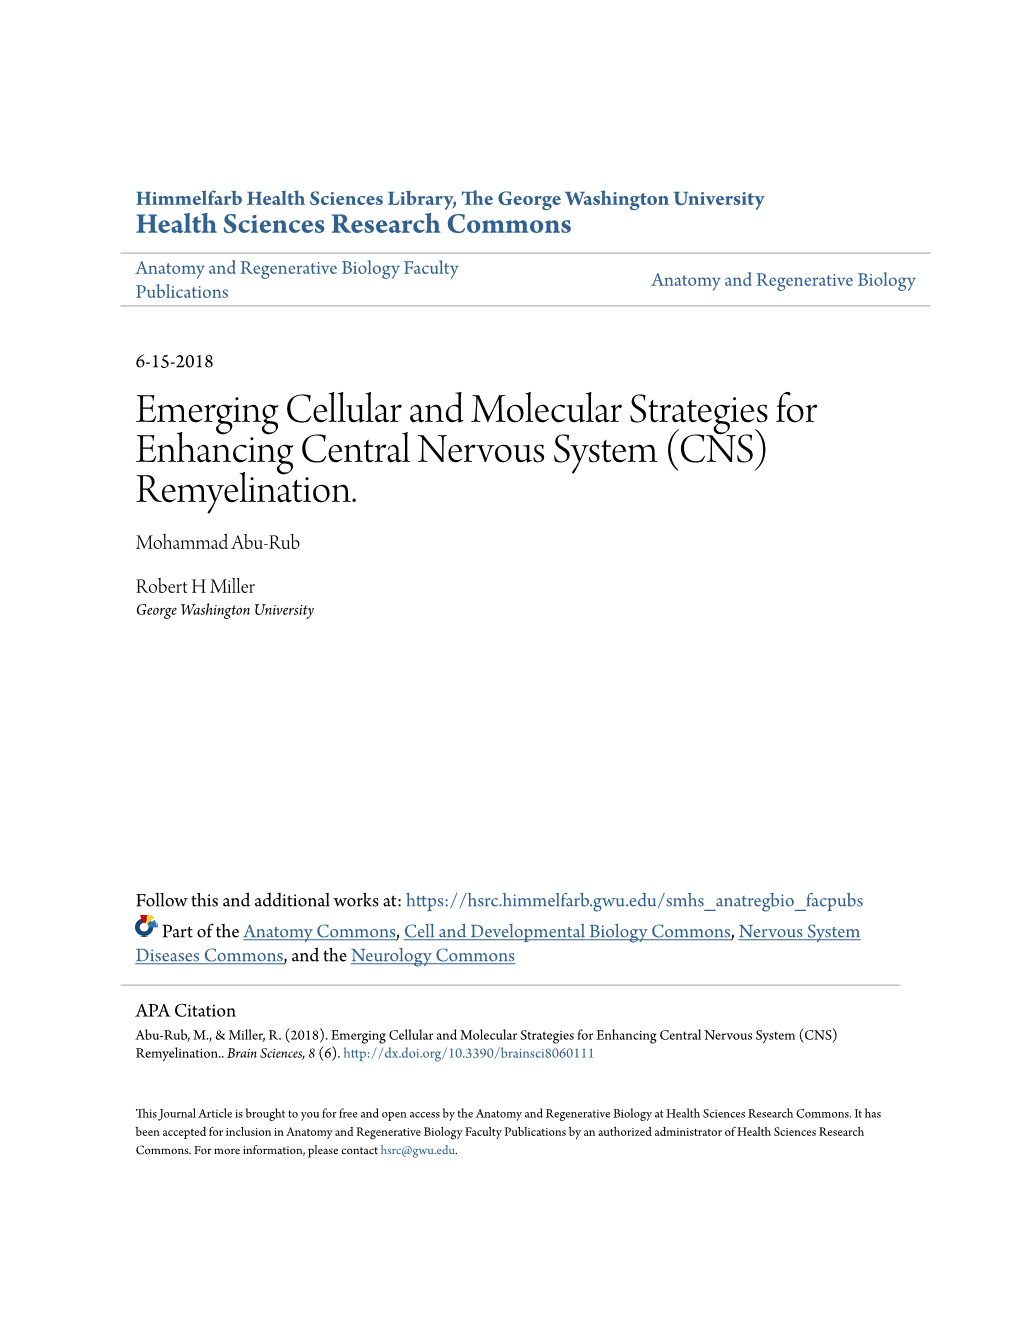 Emerging Cellular and Molecular Strategies for Enhancing Central Nervous System (CNS) Remyelination